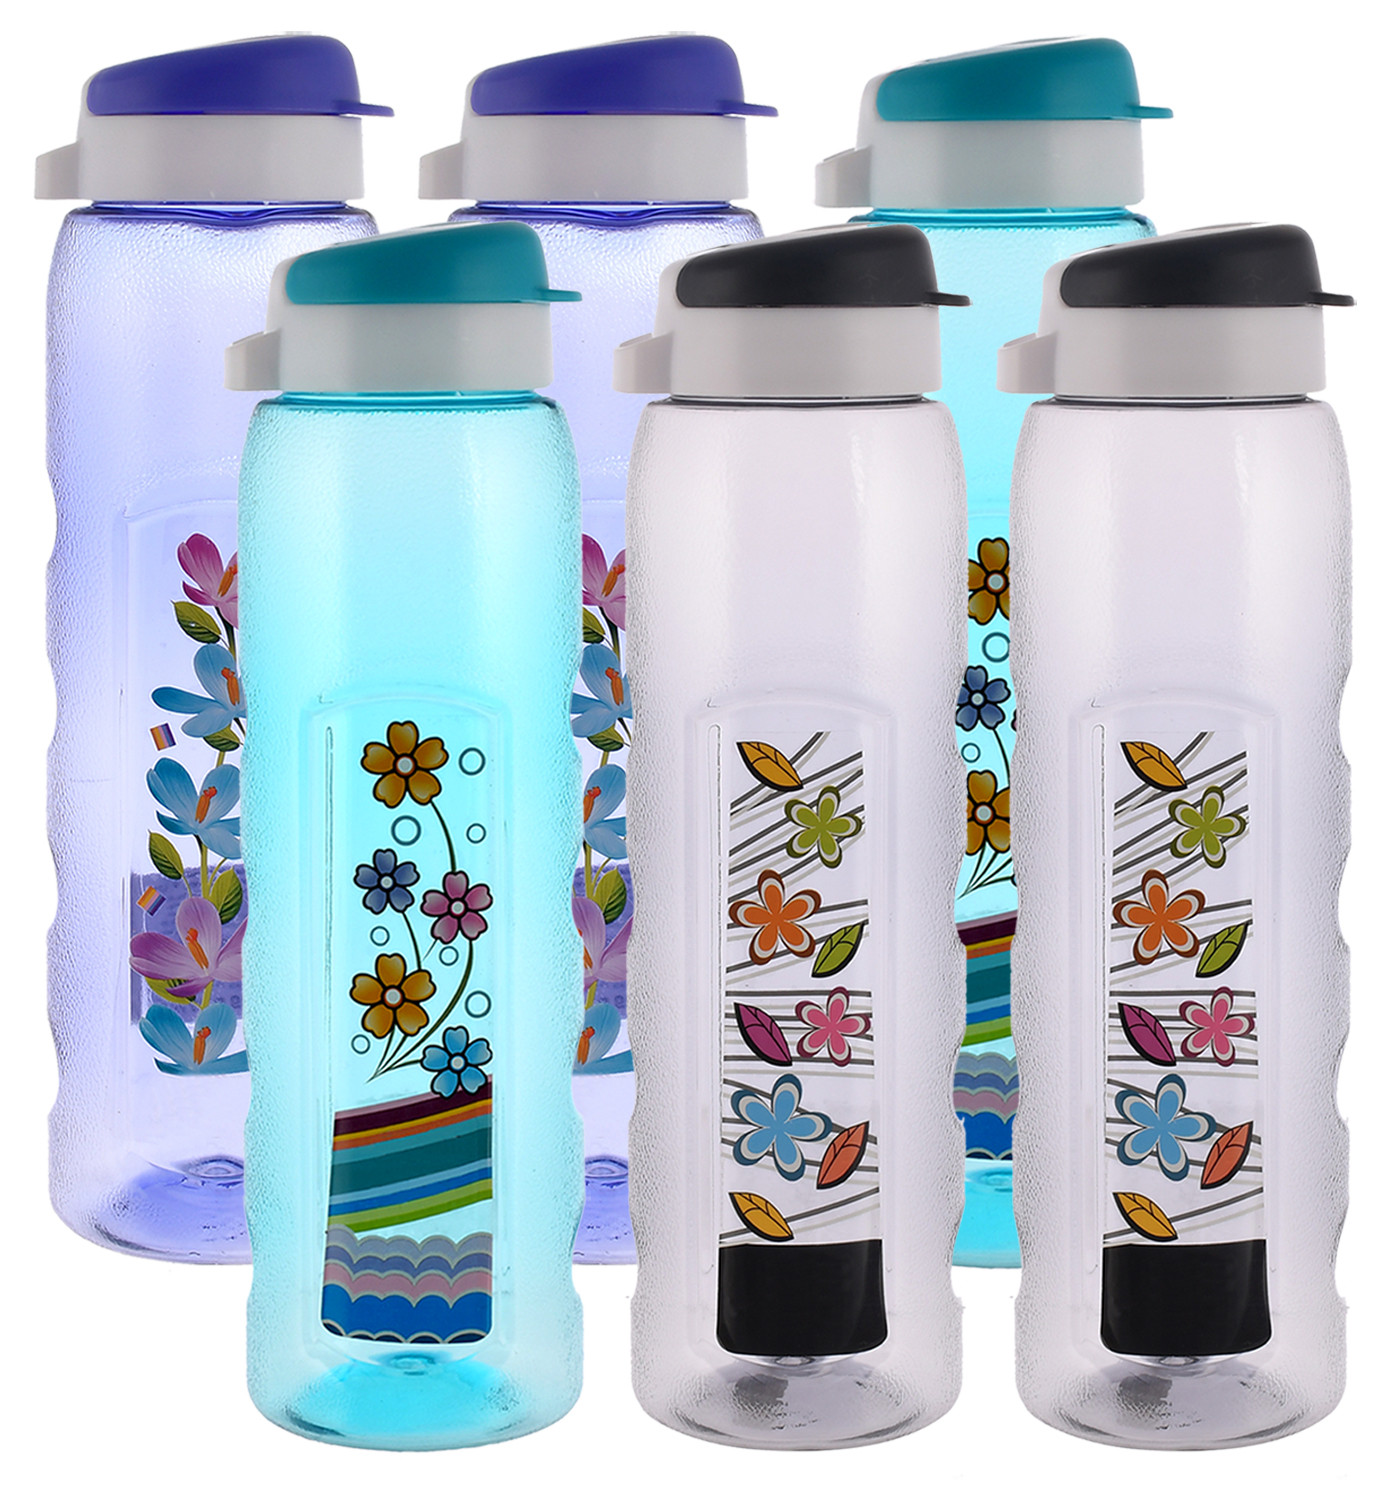 Kuber Industries Unbreakable BPA & Leak Free Plastic Water Bottle With Sipper- 1 Litre, Pack of 6 (Pruple & Sky Blue & Black)